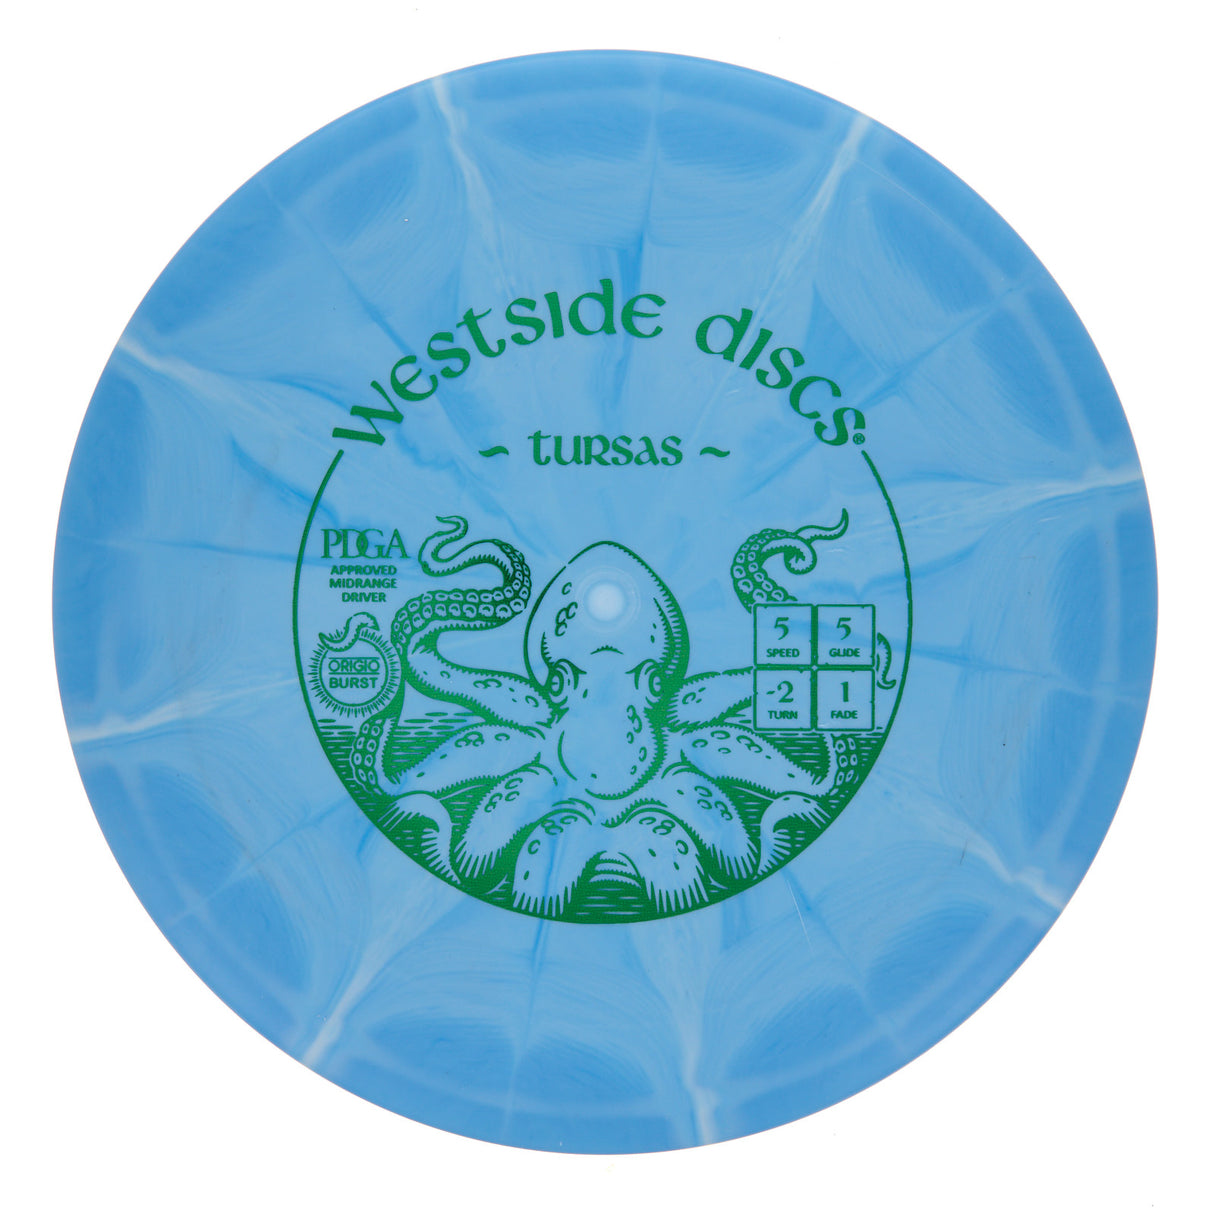 Westside Tursas - Origio Burst 178g | Style 0001